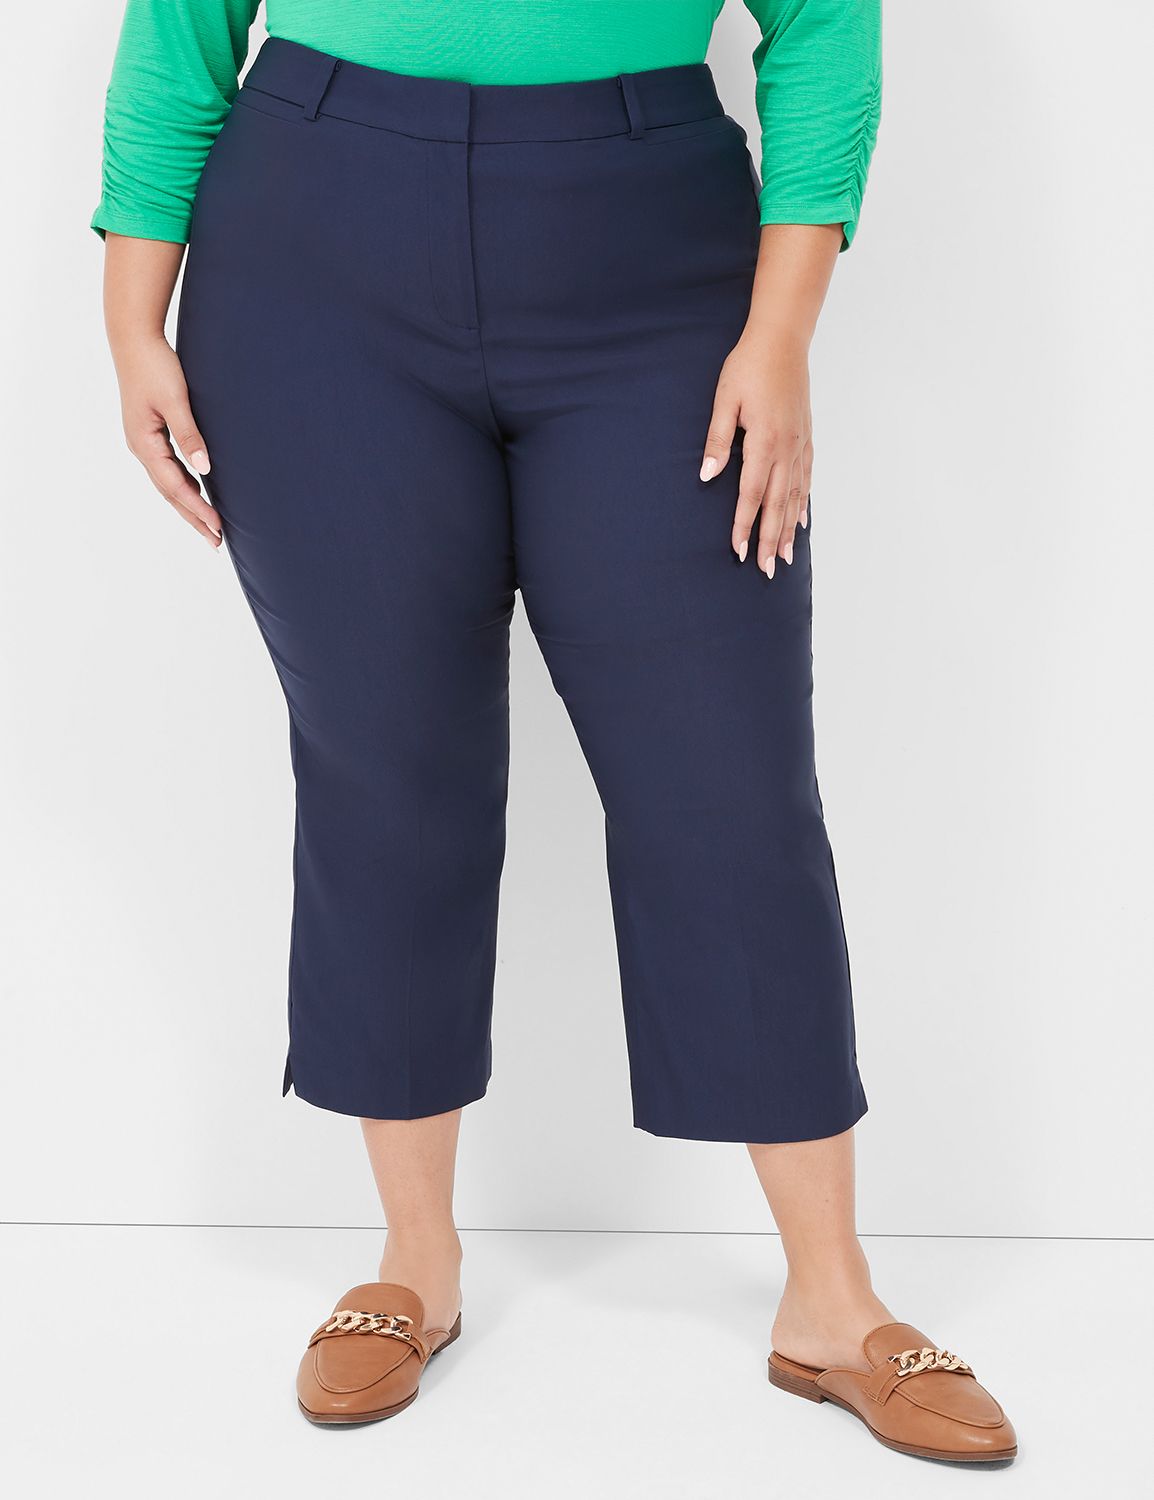 Plus Size Capri Pants for Women High Waisted Lace Slim Fit